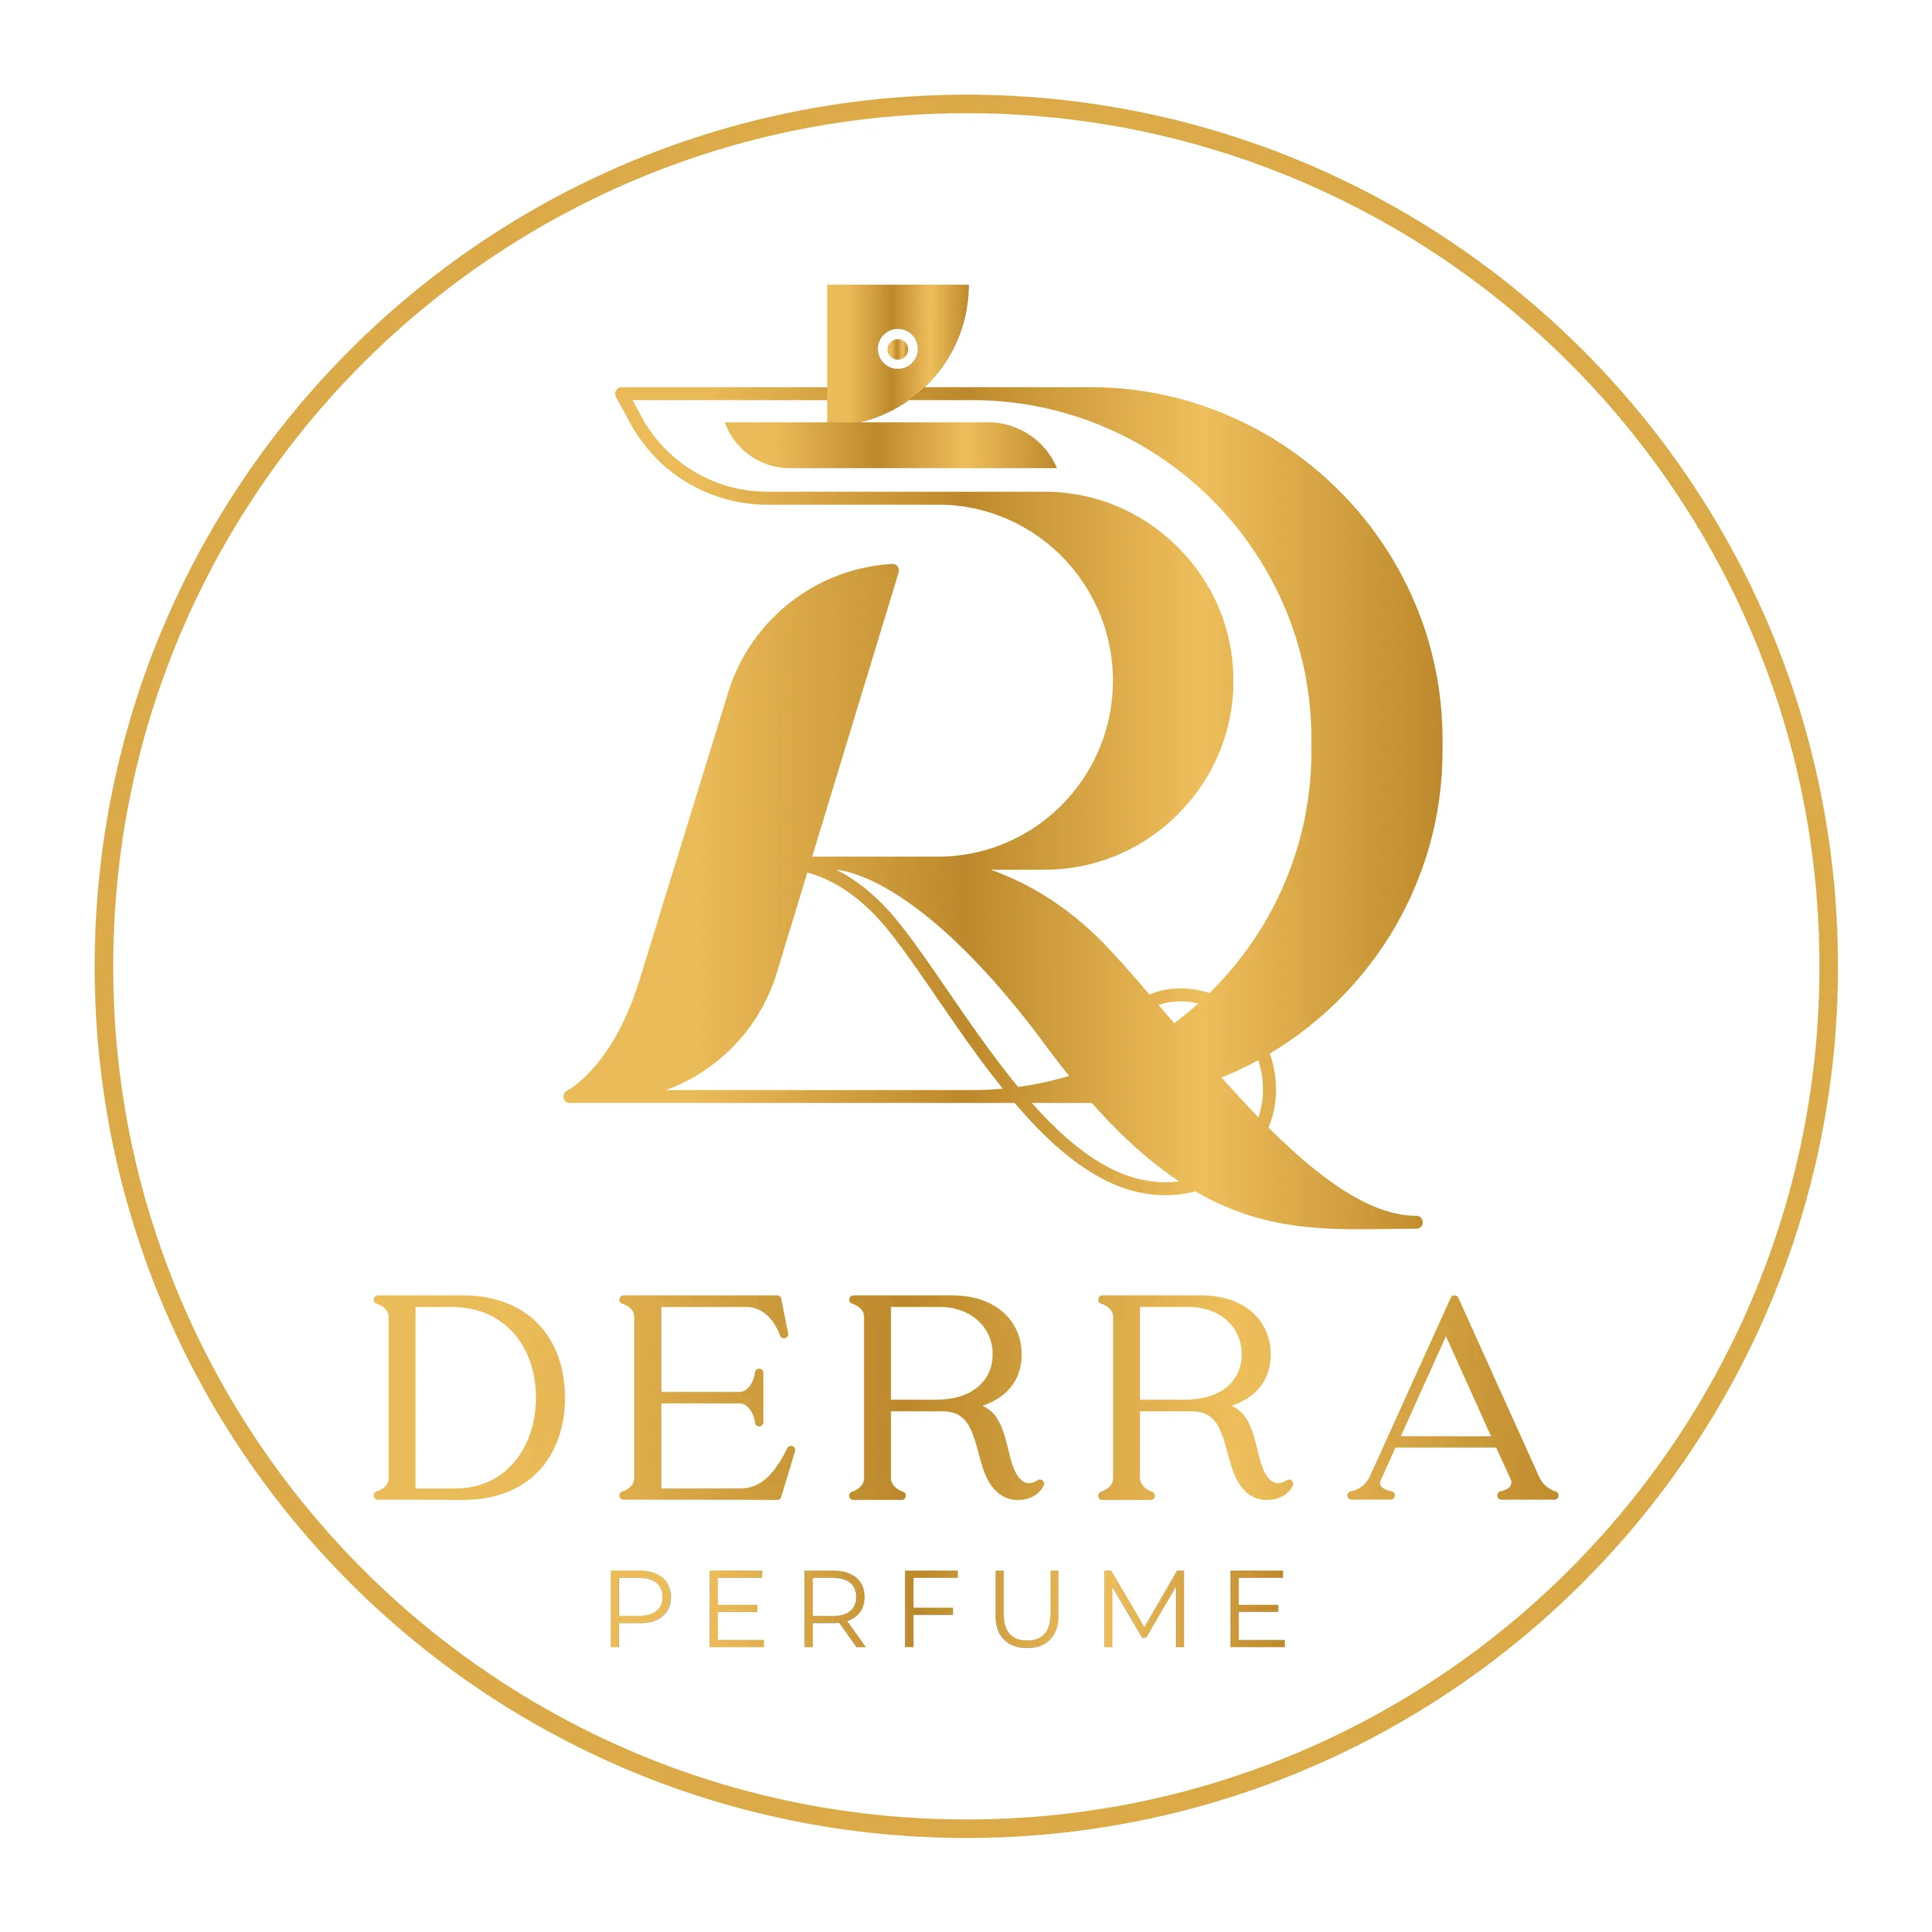 Derra Perfume Official